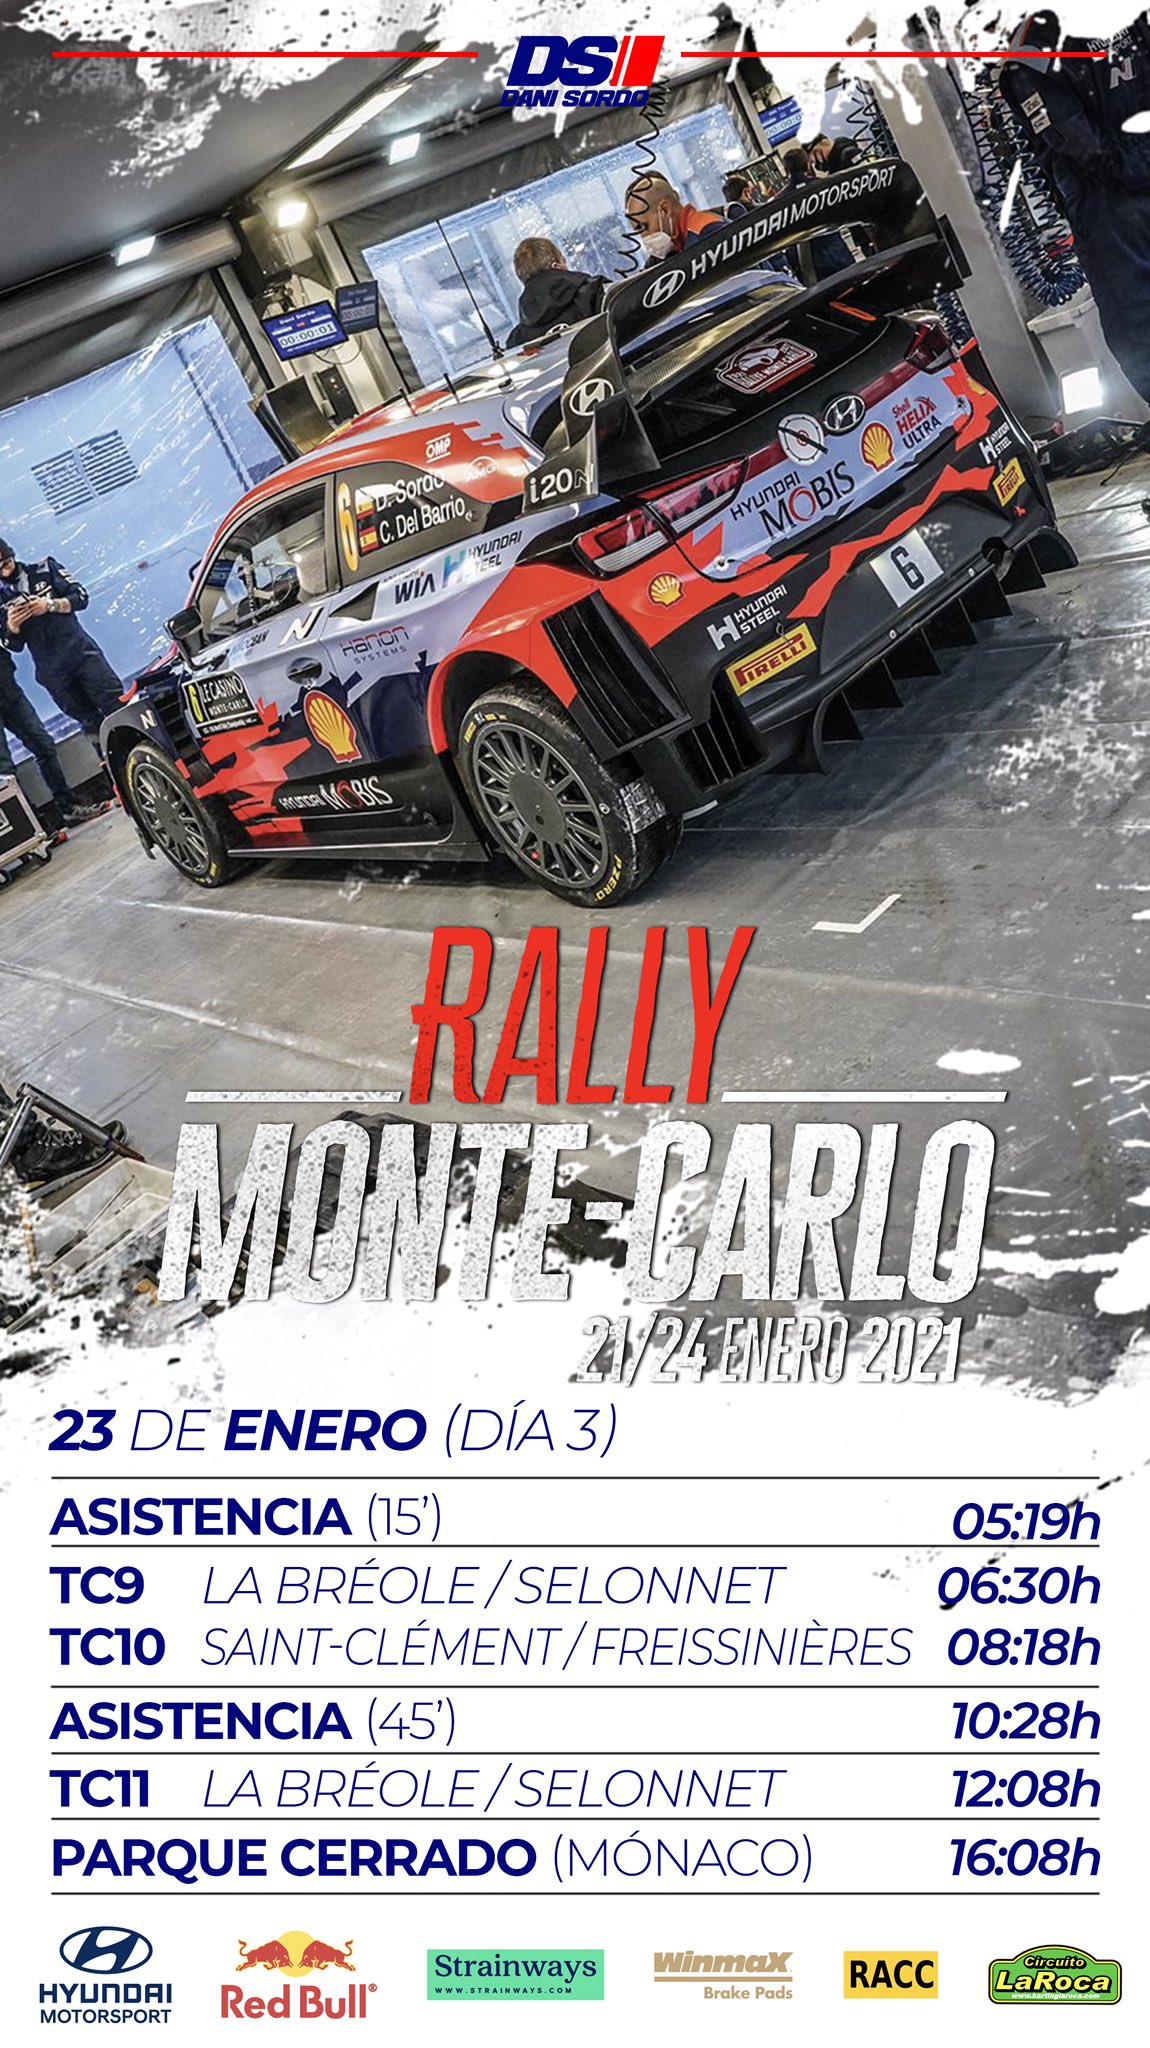 wrclive - WRC: 89º Rallye Automobile de Monte-Carlo [18-24 Enero] - Página 9 EsY-9MMXMAYHysf?format=jpg&name=large